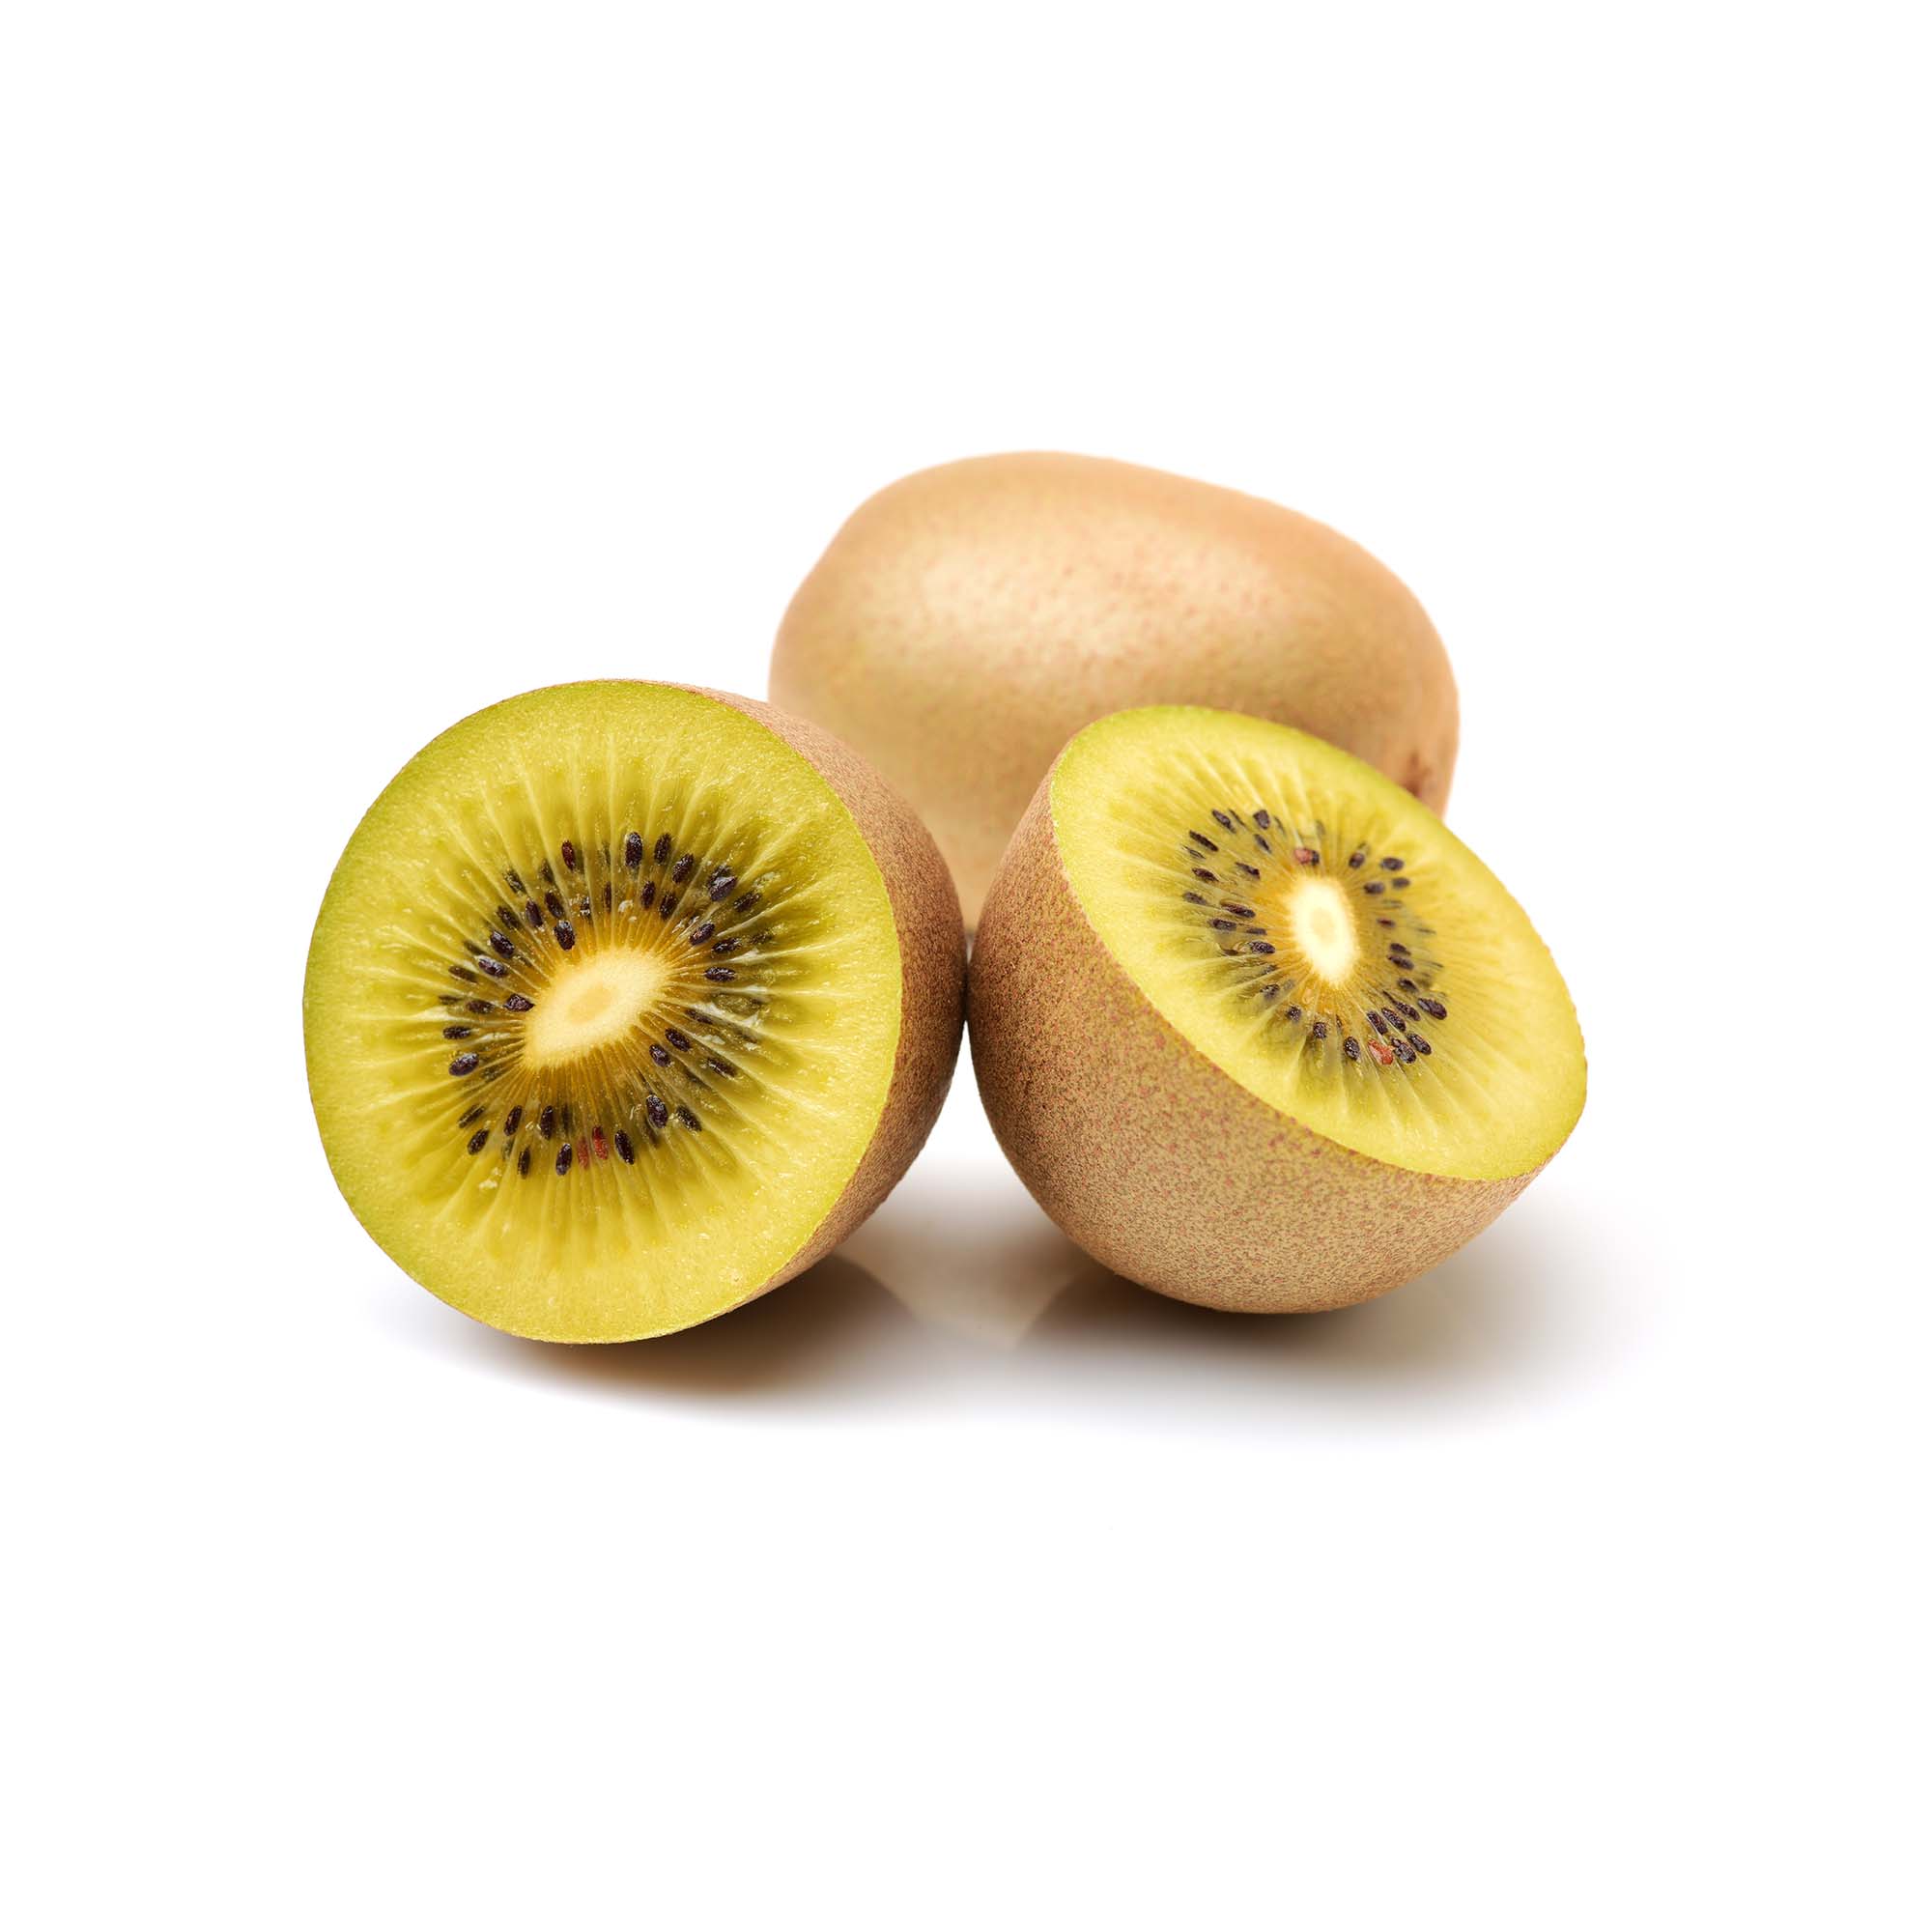 Buy Golden Kiwi Online - Exotic Fruits Delivery Exotic Fruit, Now Rare – UK